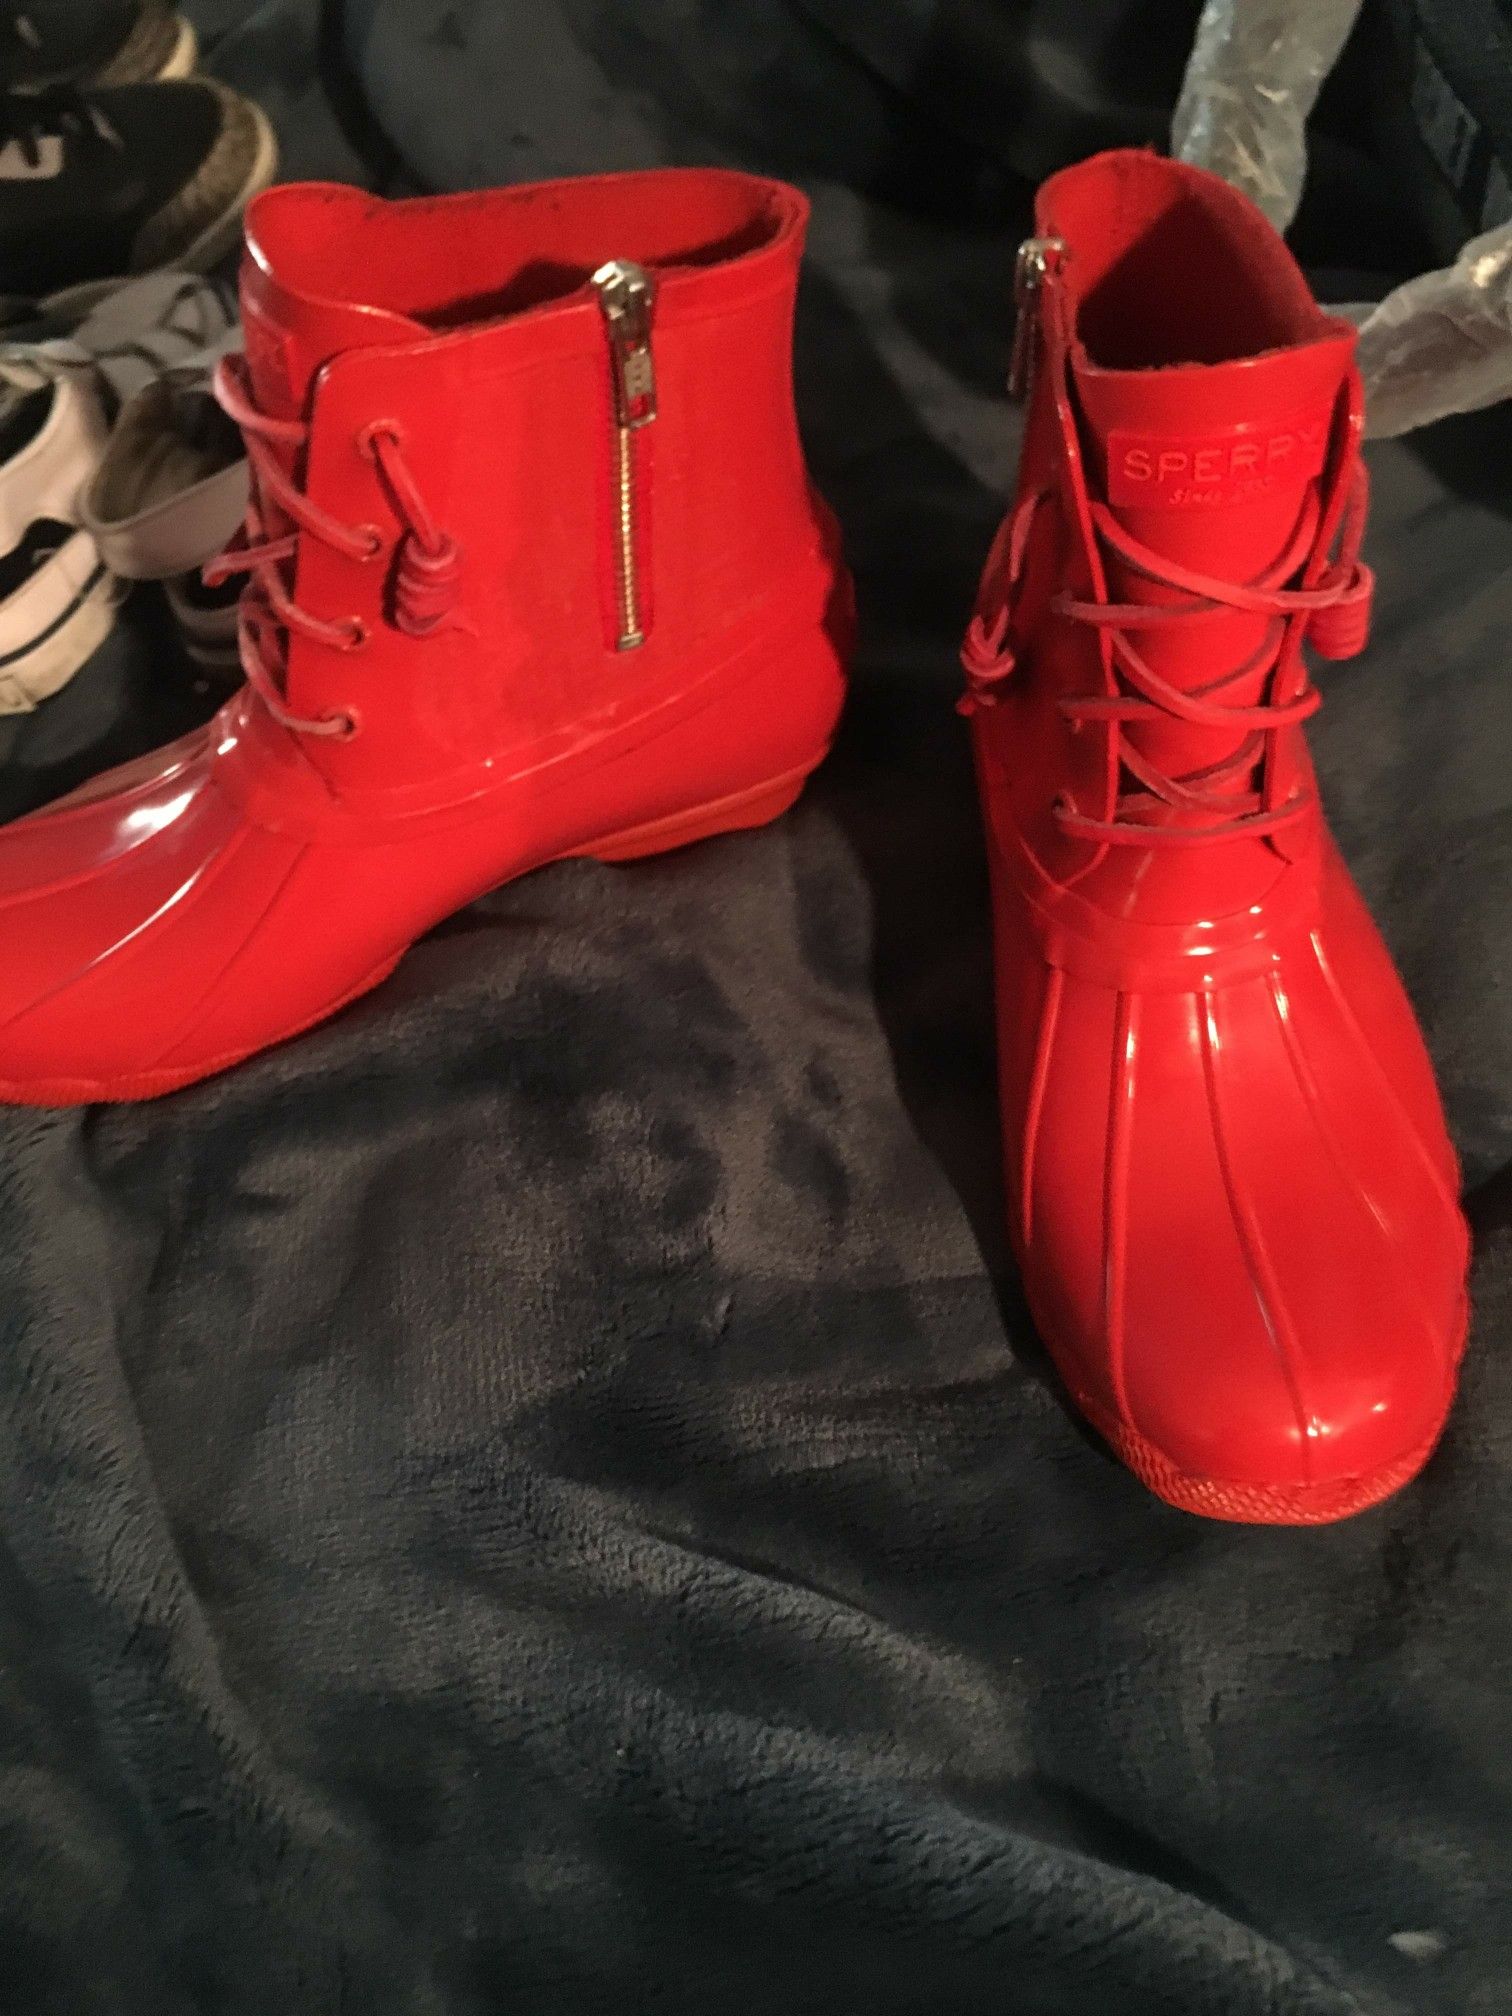 Sperry rain boots